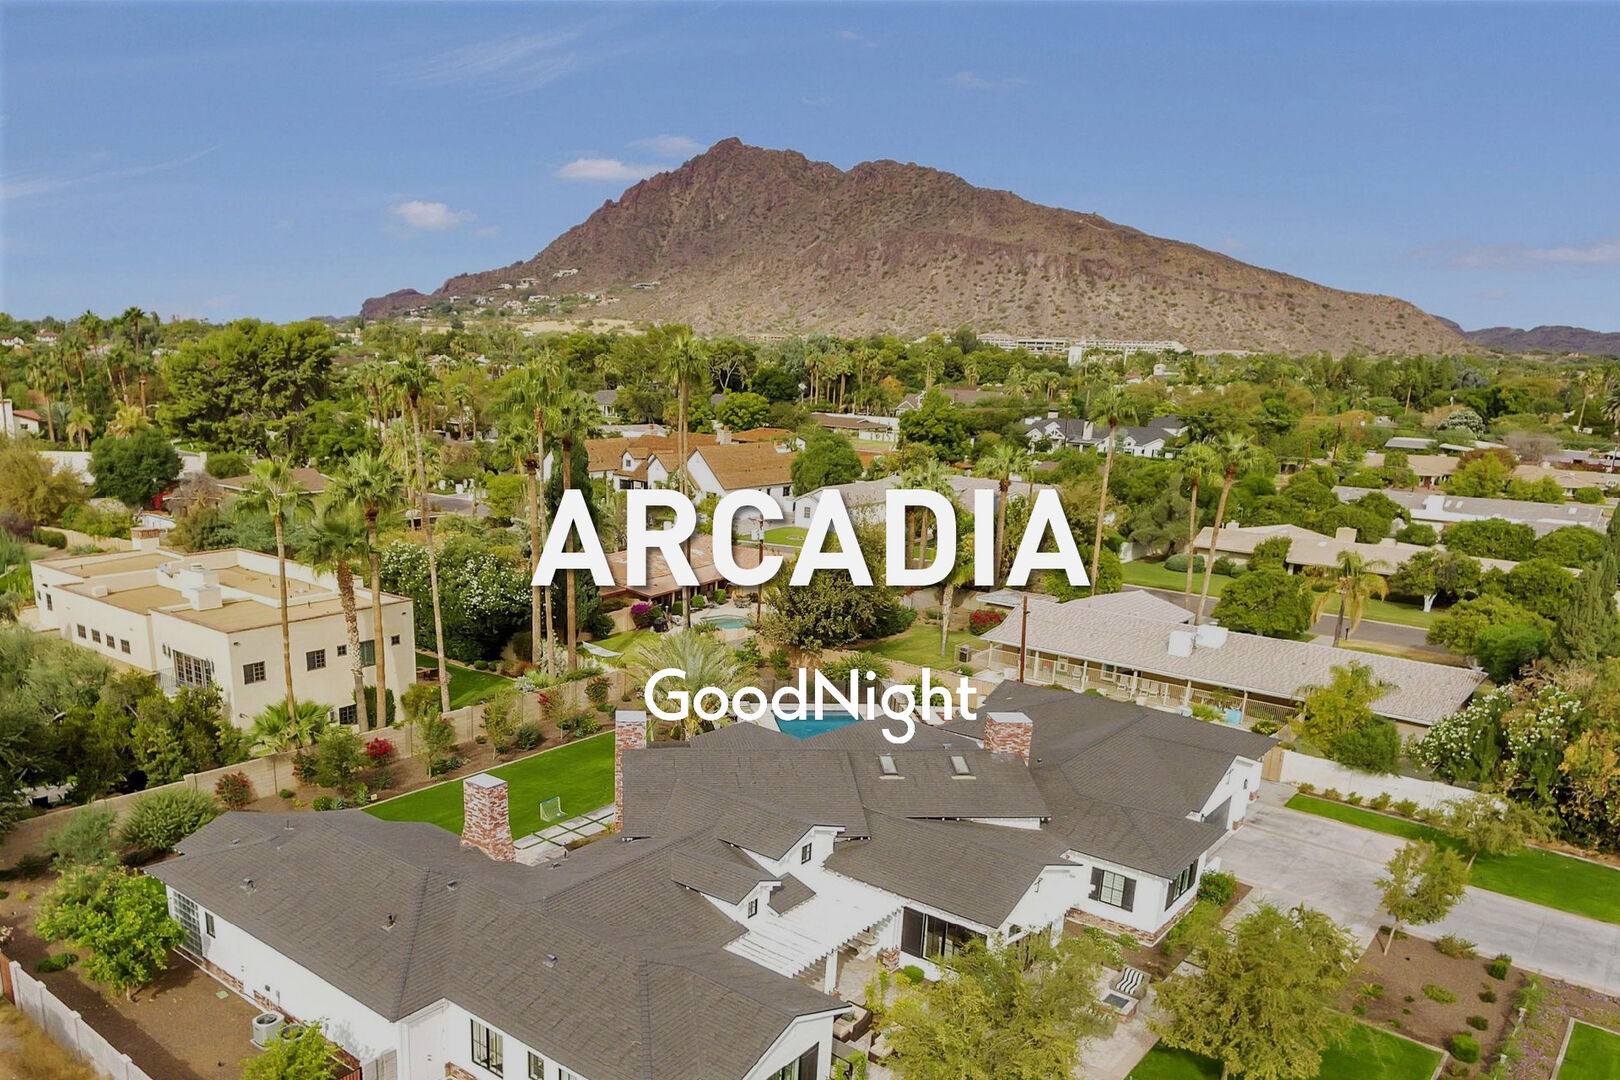 Arcadia: 6 min